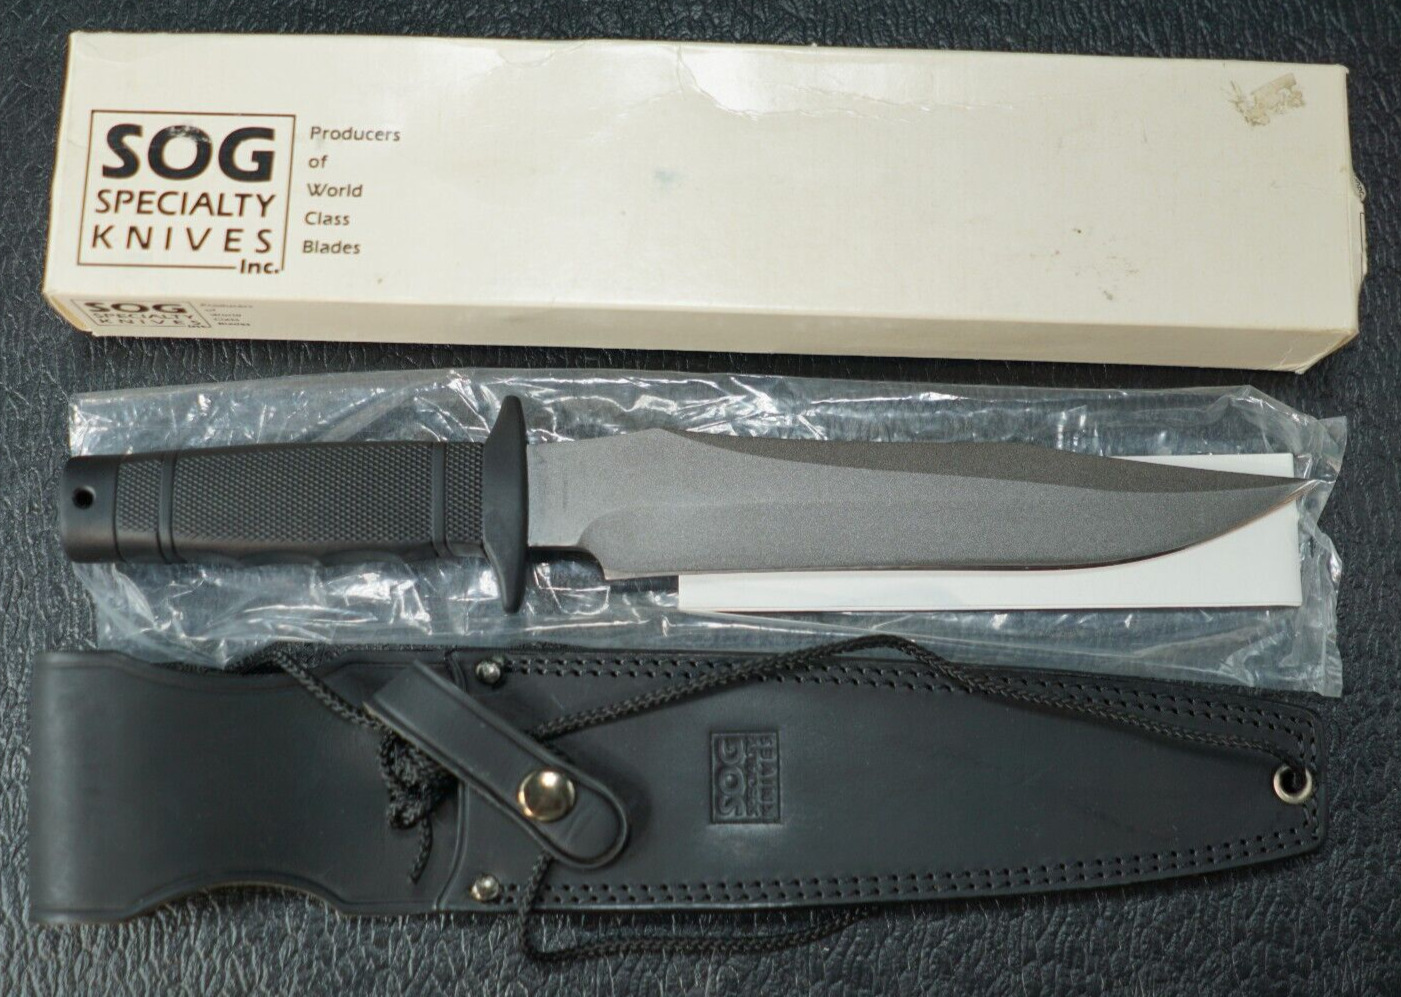 SOG Specialty Bowie Knife Tigershark w/ Leather Sheath Box Seki Japan NOS, A2